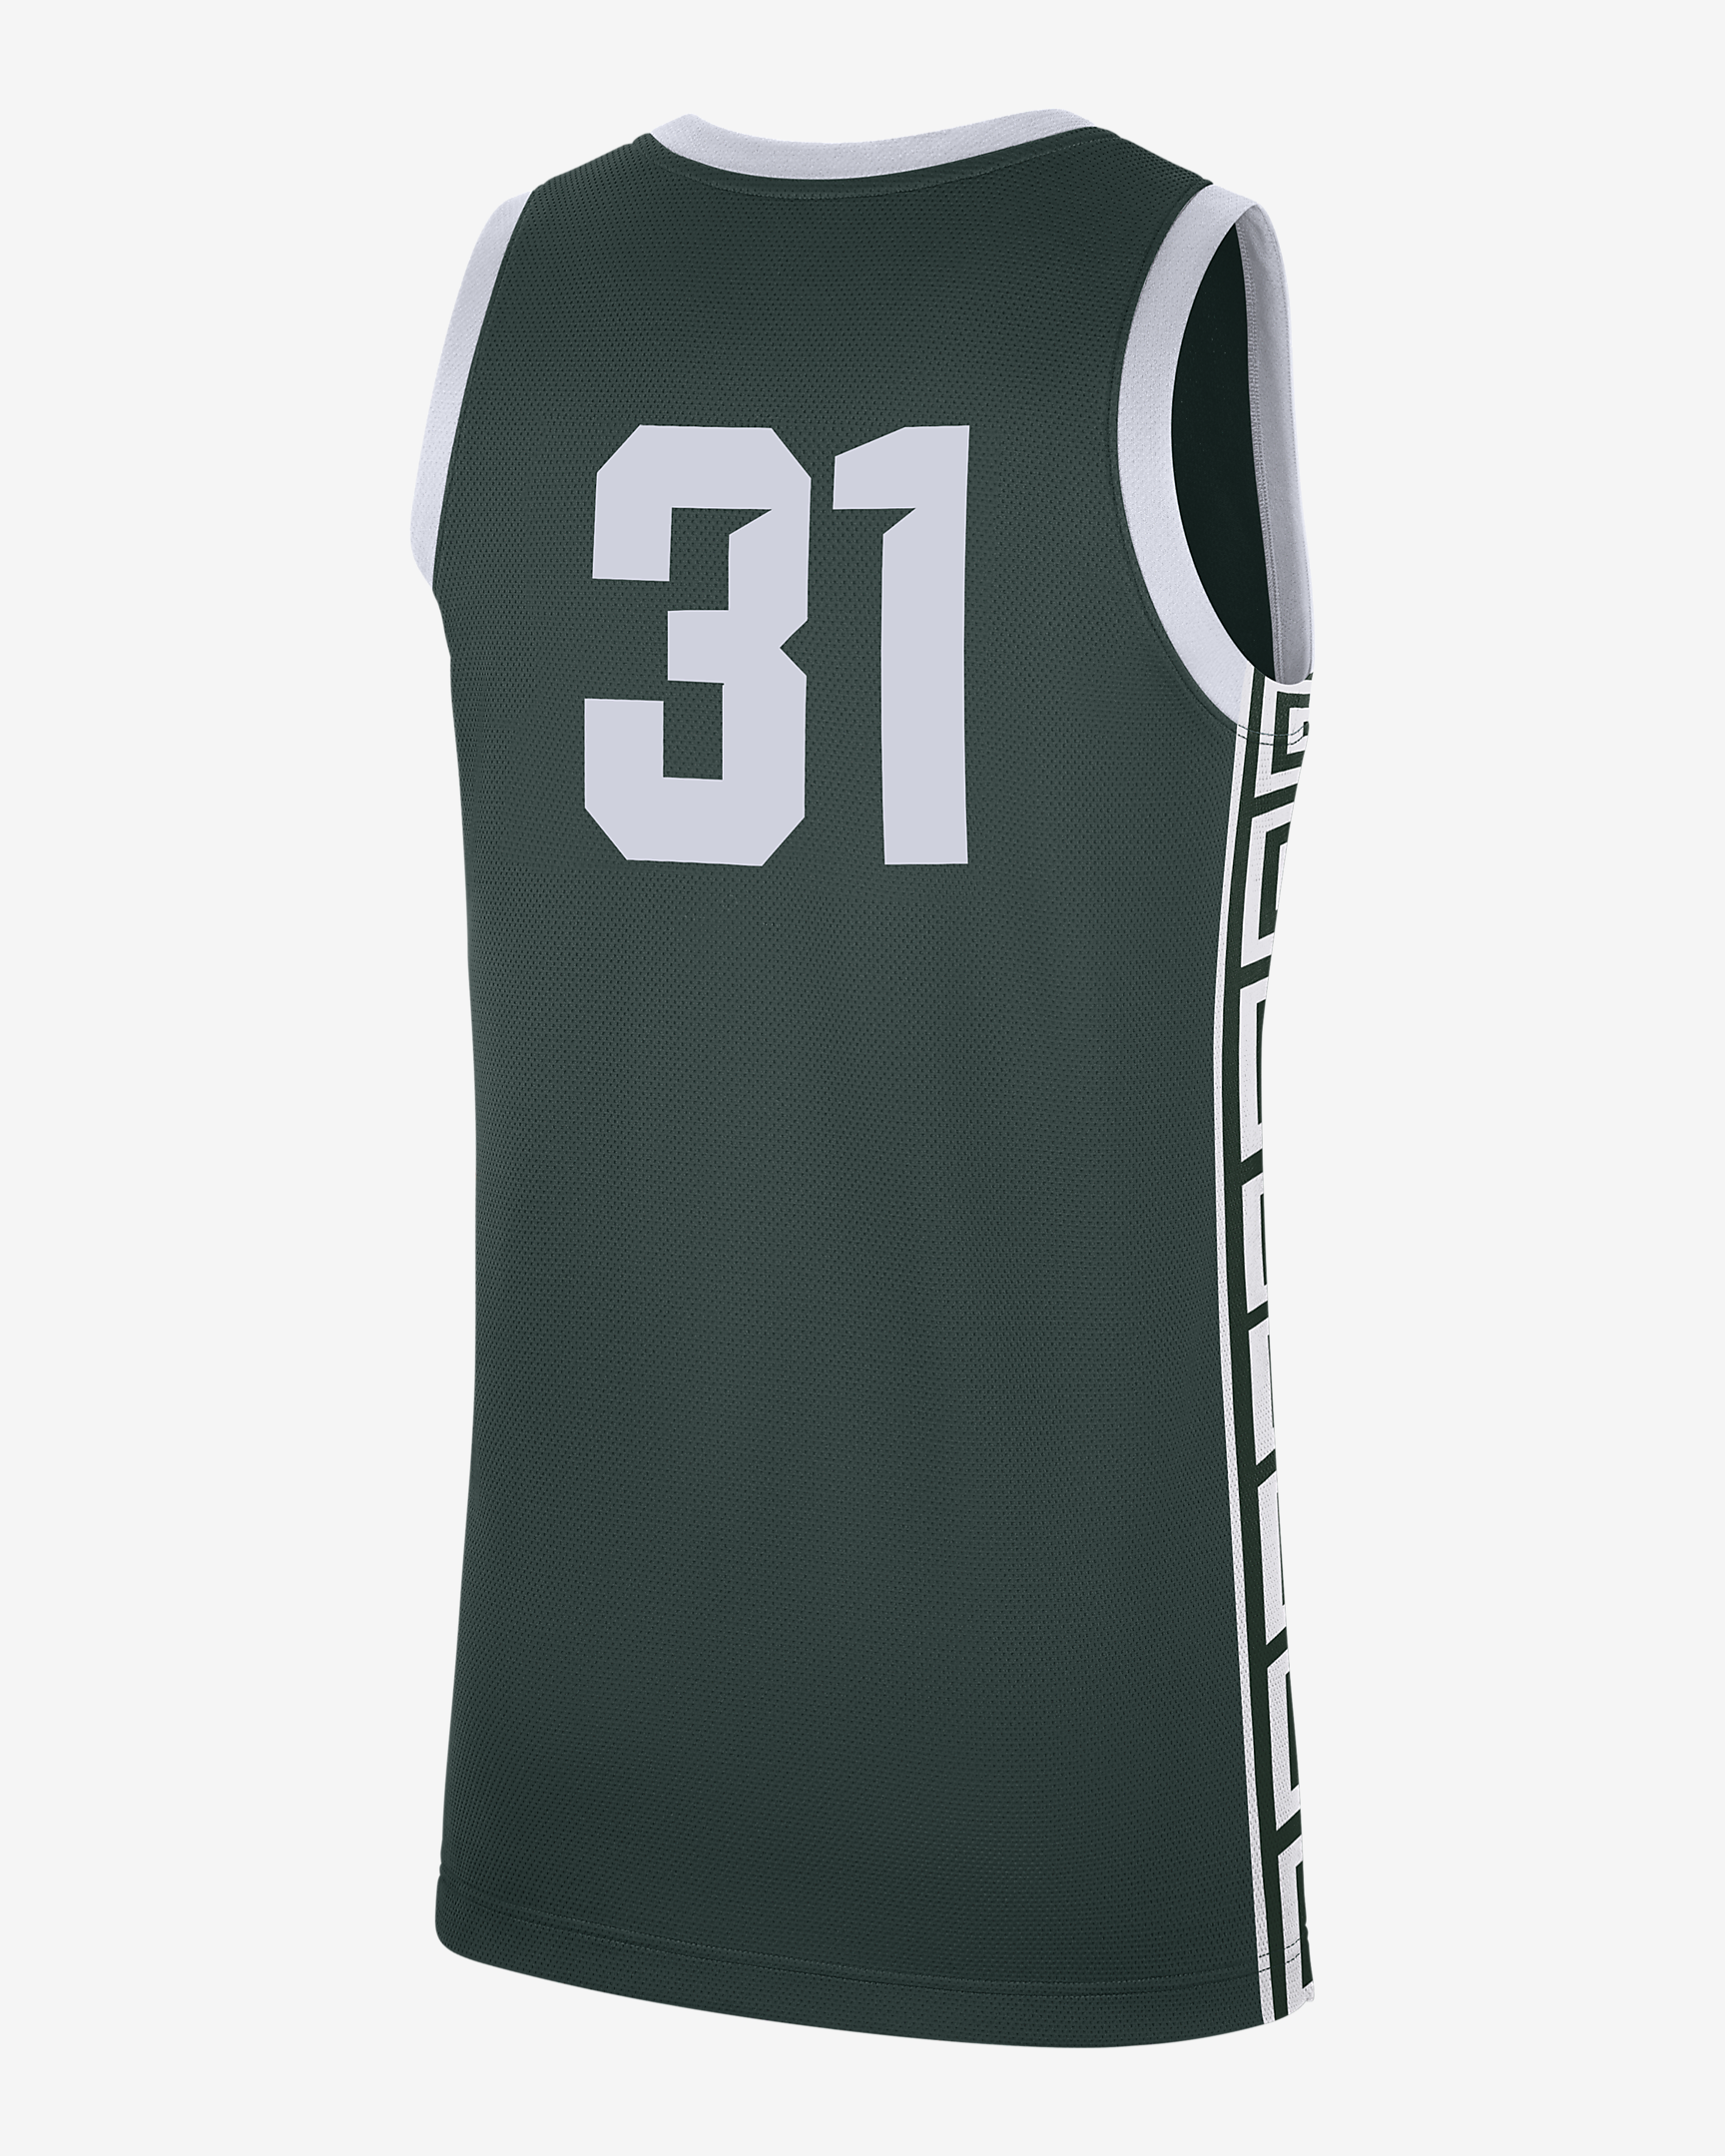 New hoops jerseys Replica-michigan-state-mens-basketball-jersey-7Q7kwS